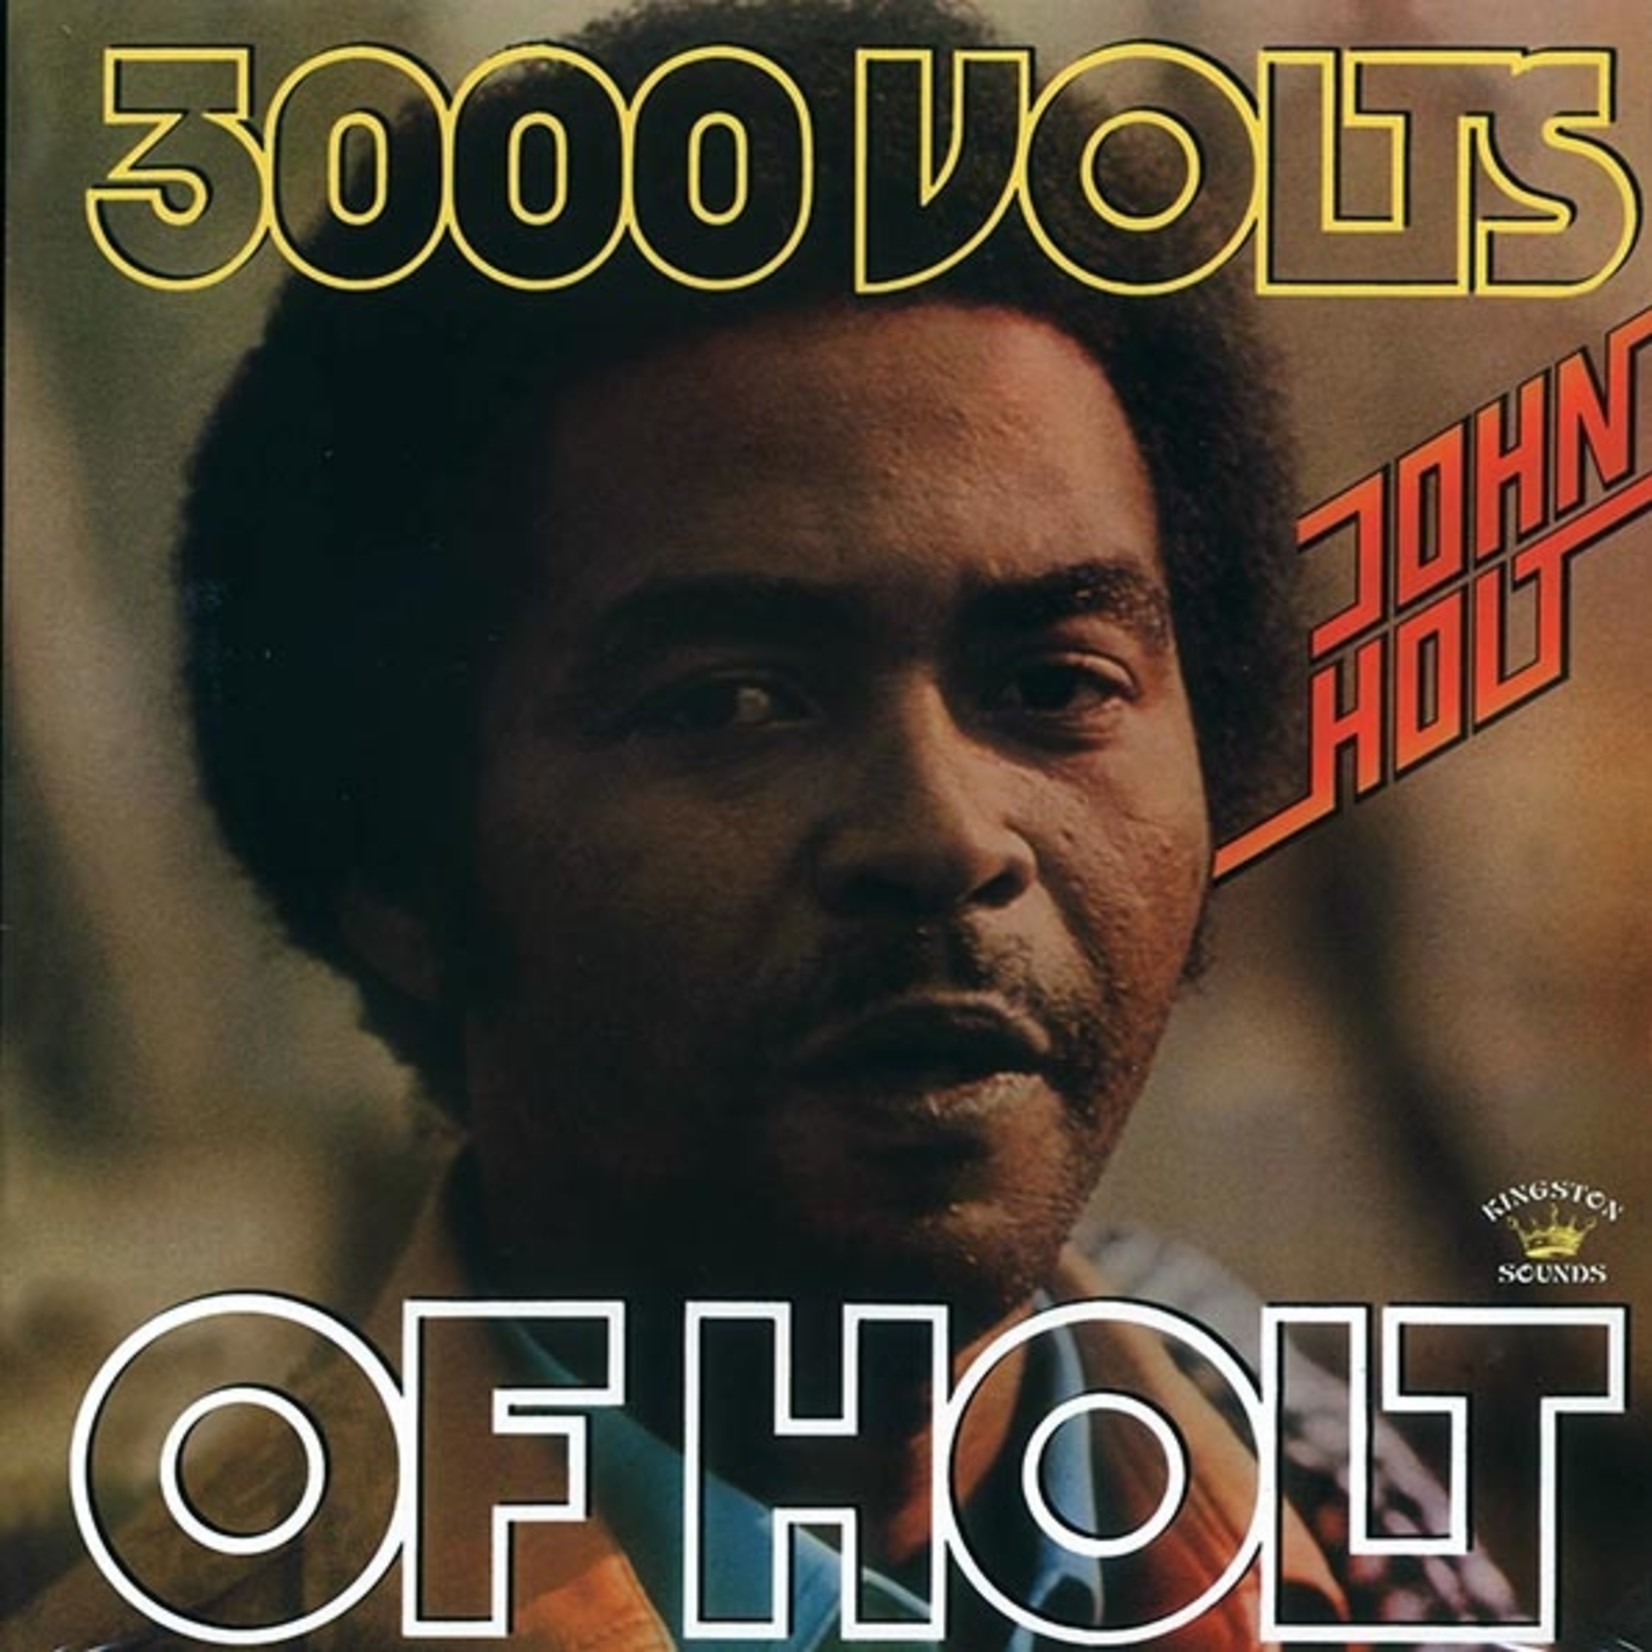 John Holt - 3000 Volts Of Holt (Kingston Sounds/Jamaican Recordings) (180g)